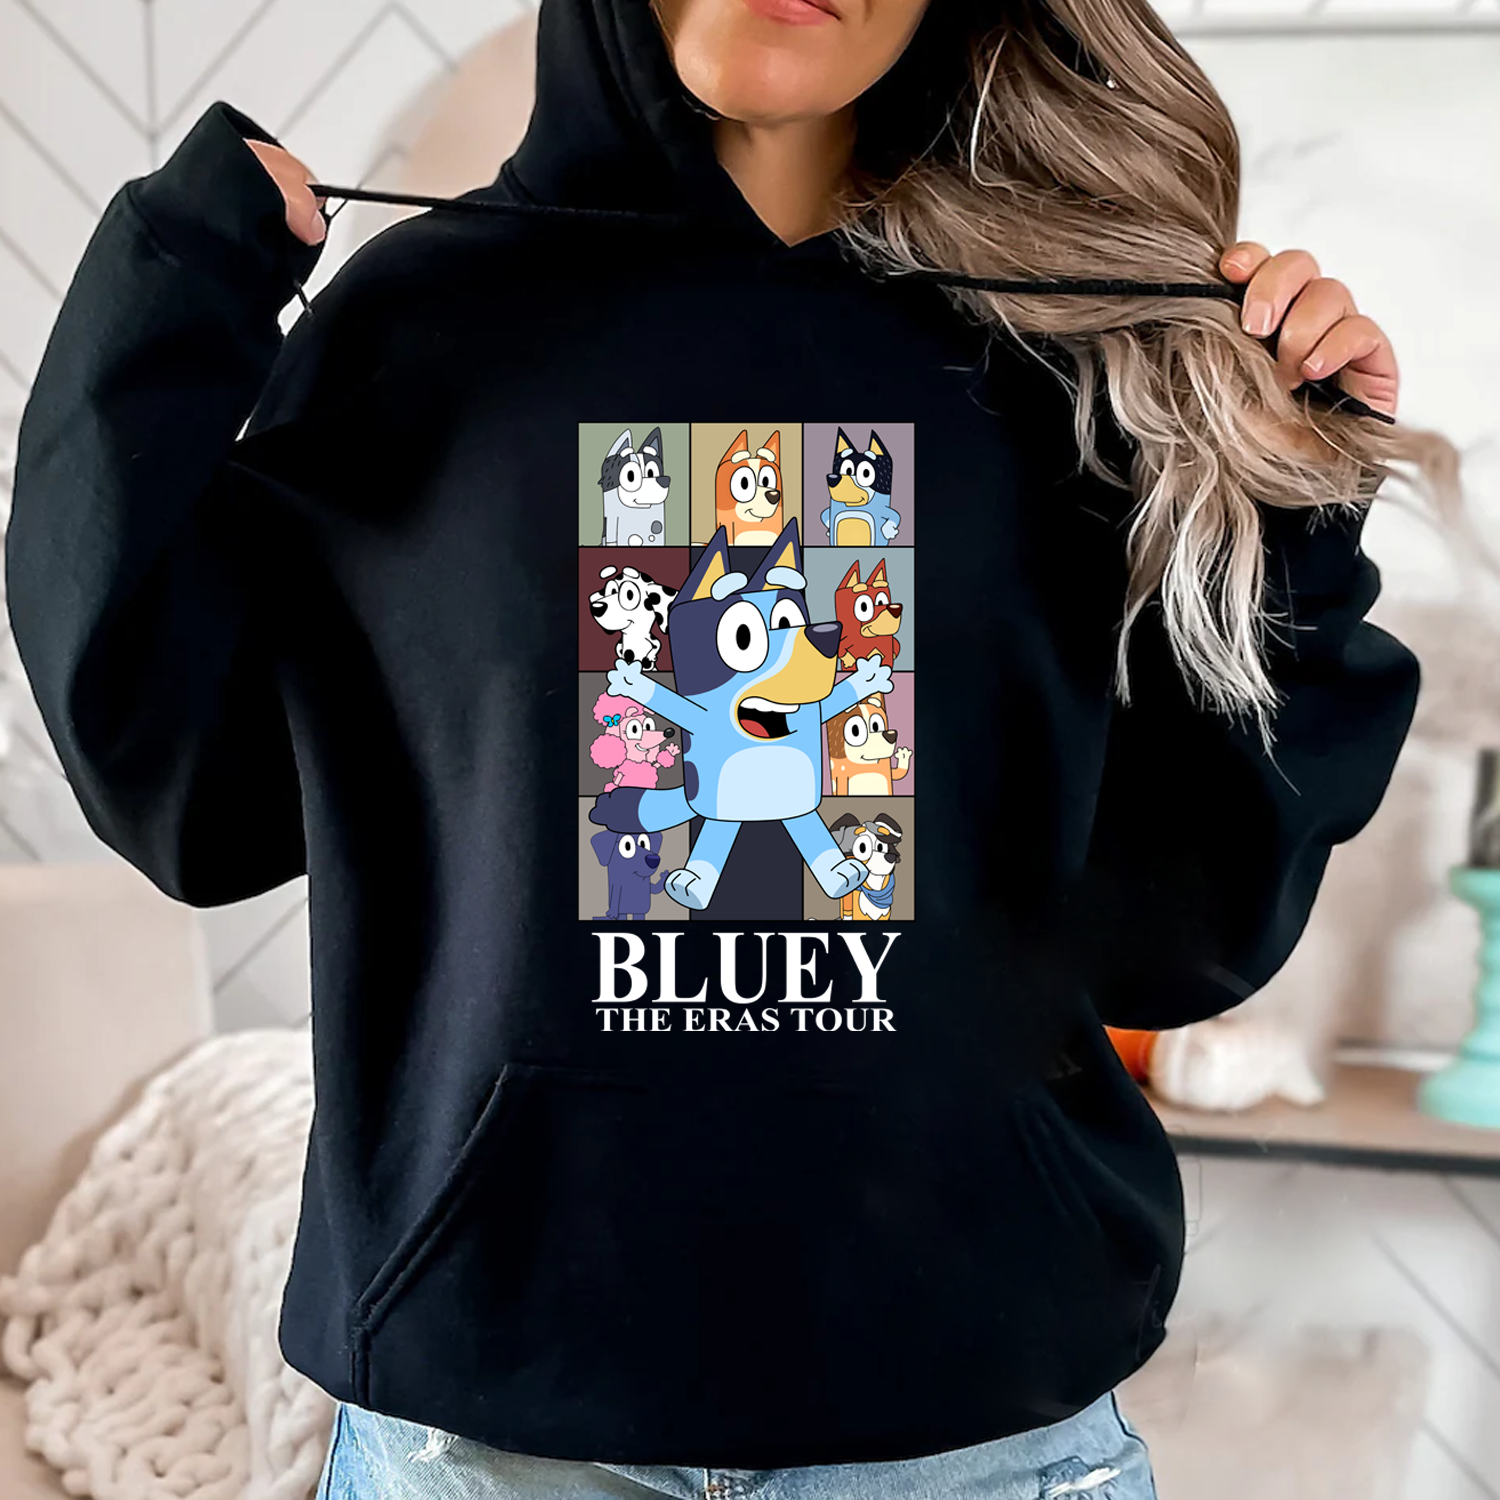 Bluey The Eras Tour Shirt Hoodie Sweatshirt